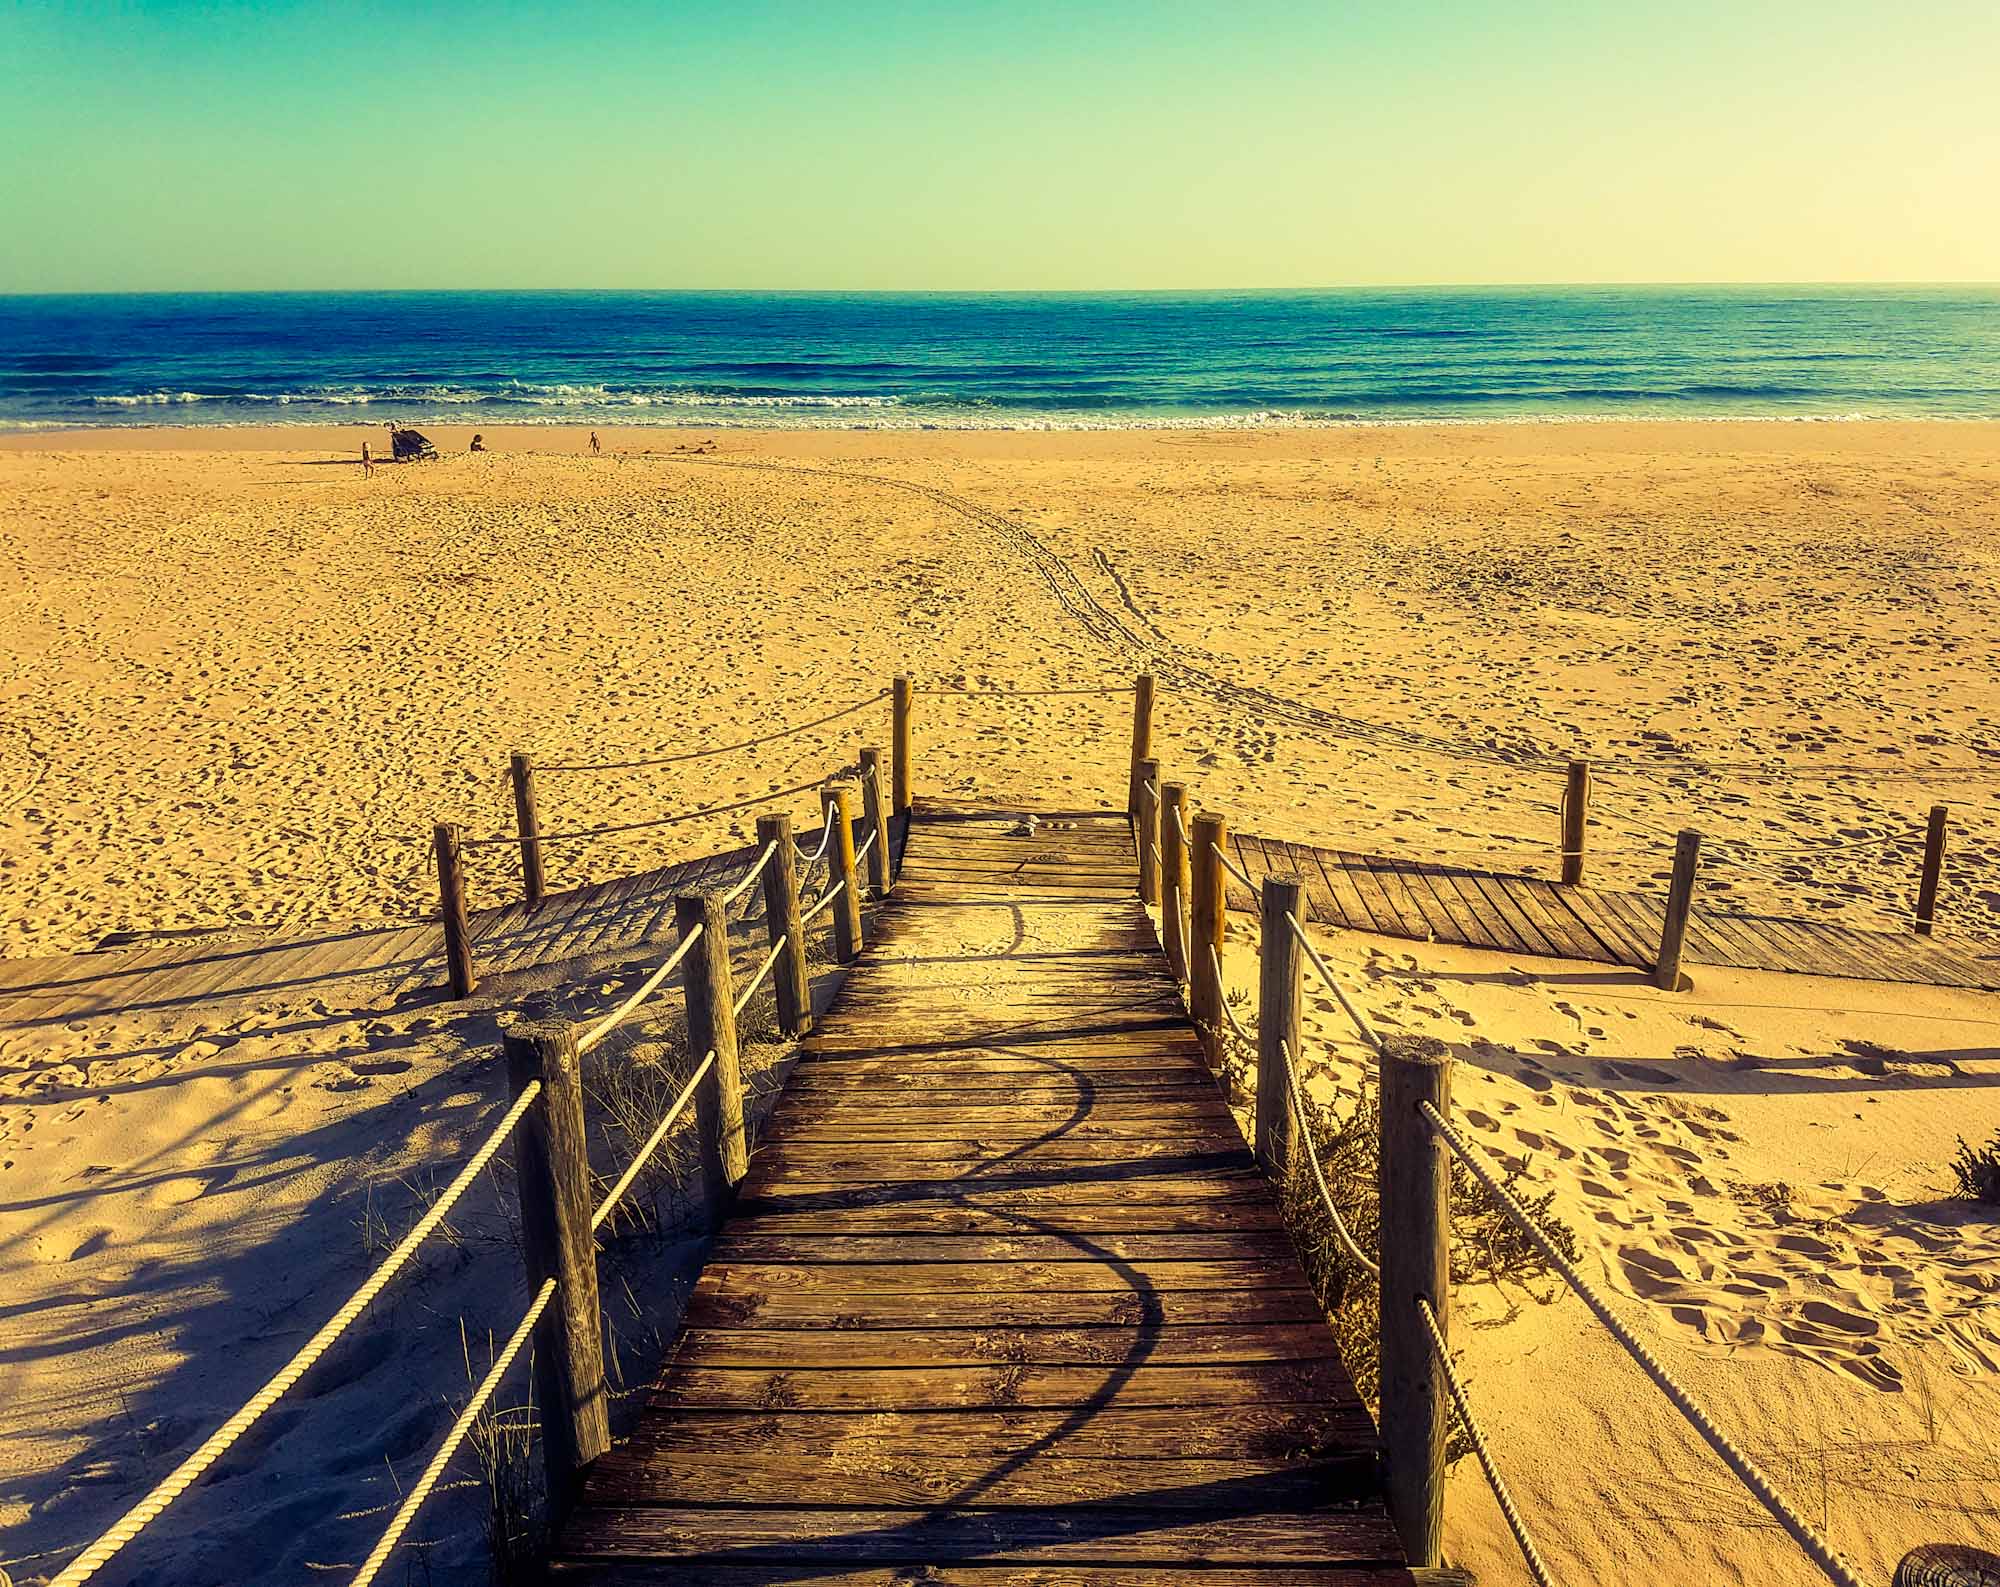 Looking down a wooden boardwalk leading onto a large, empty sandy beach